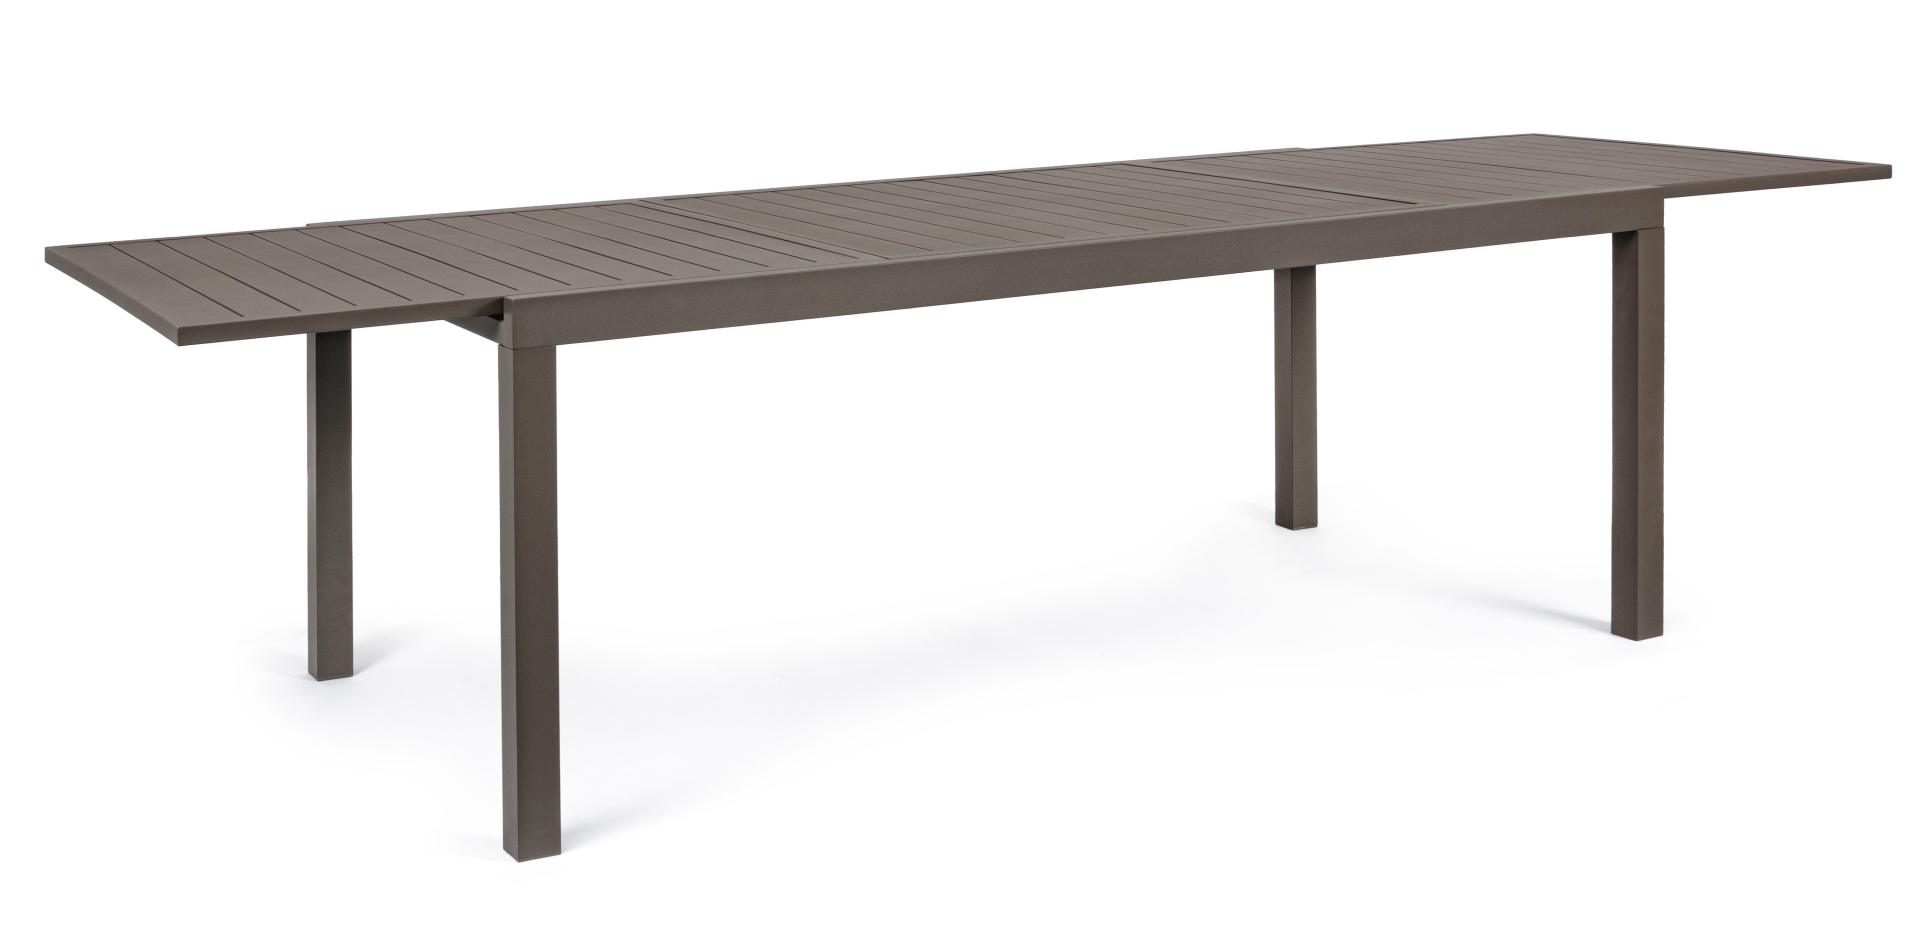 Tisch ausziehbar Aluminium